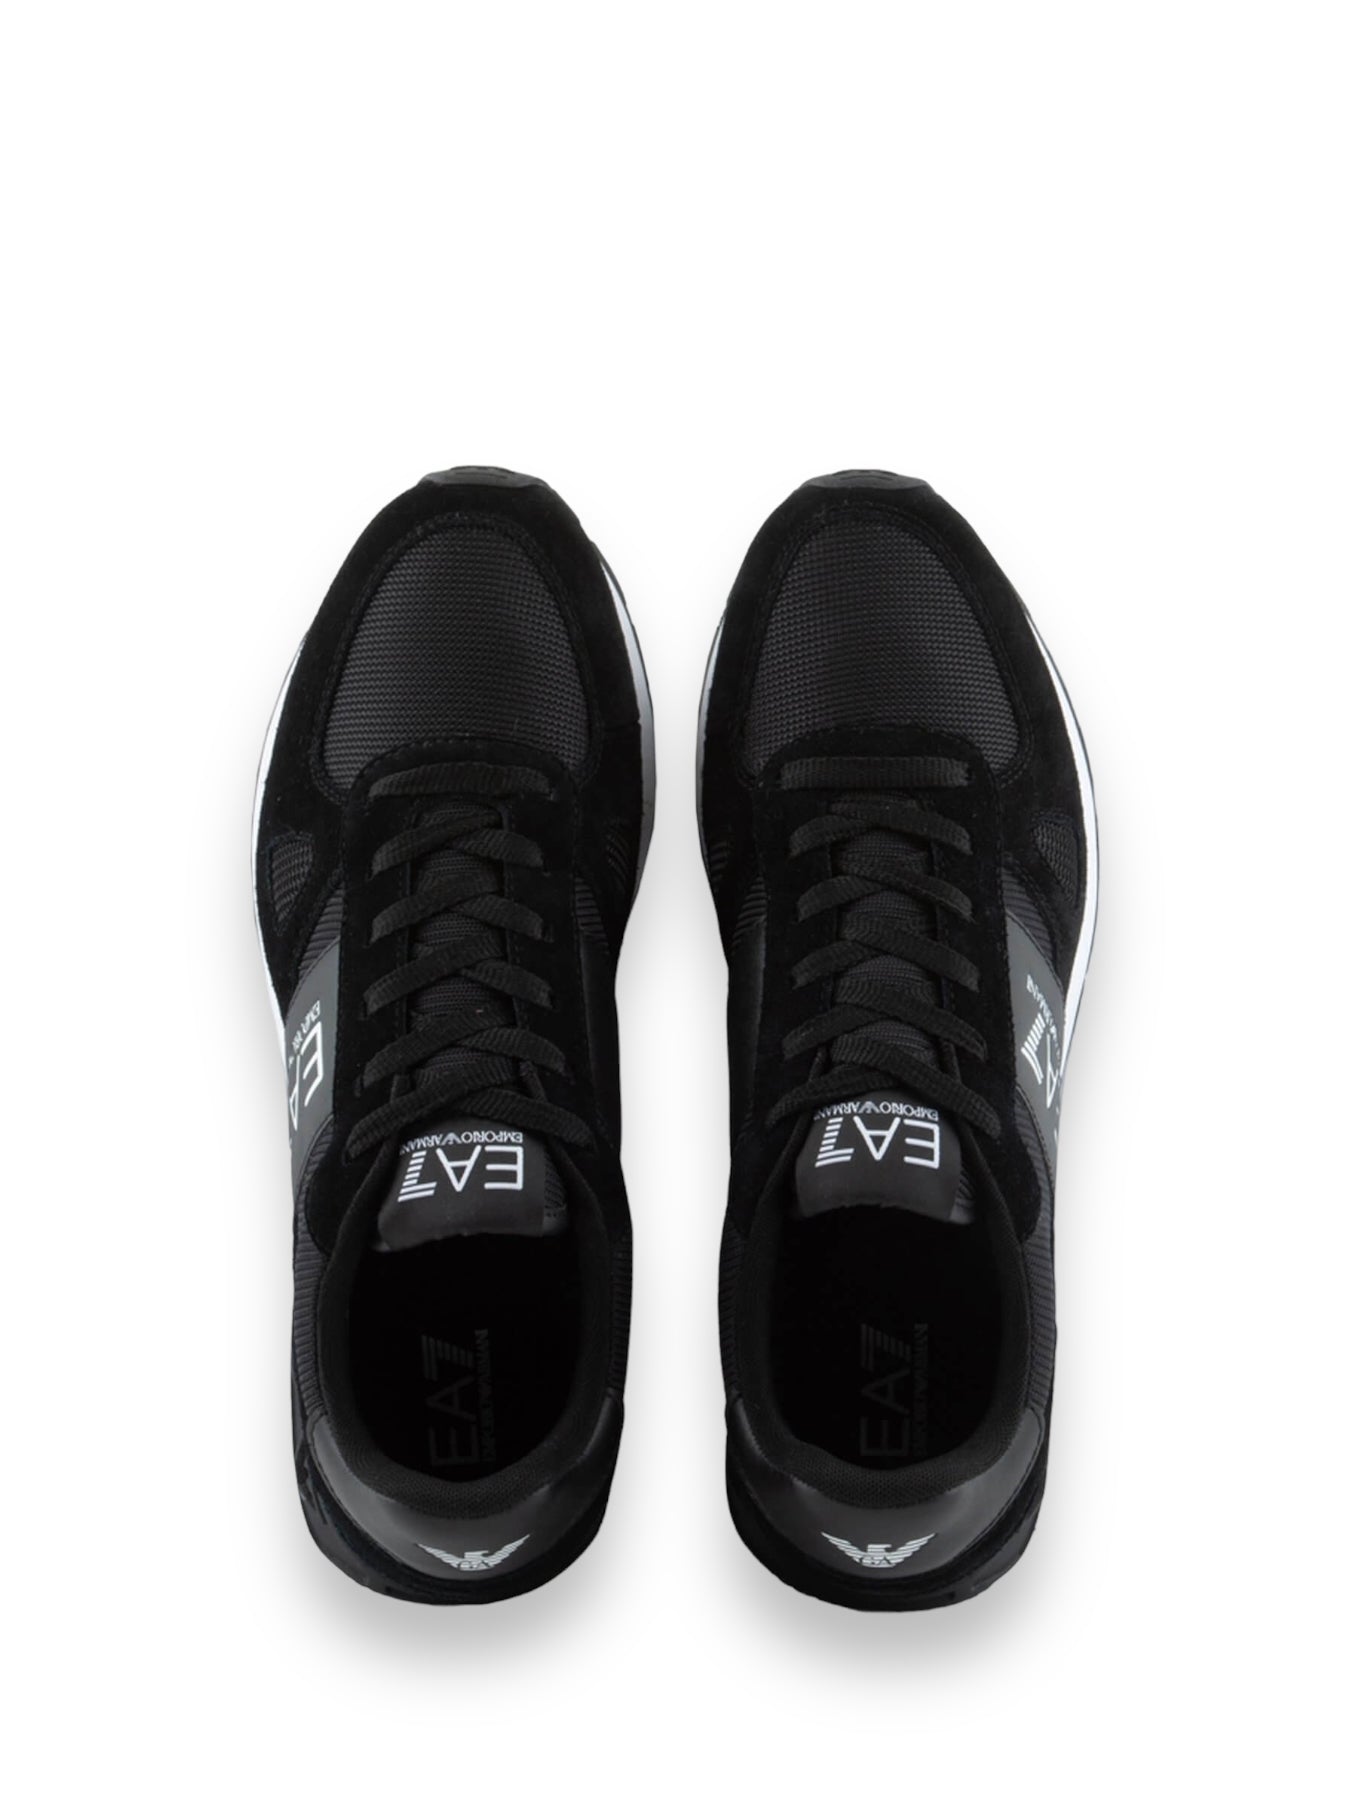 Ea7 Emporio Armani Sneakers X8x151 Black+white